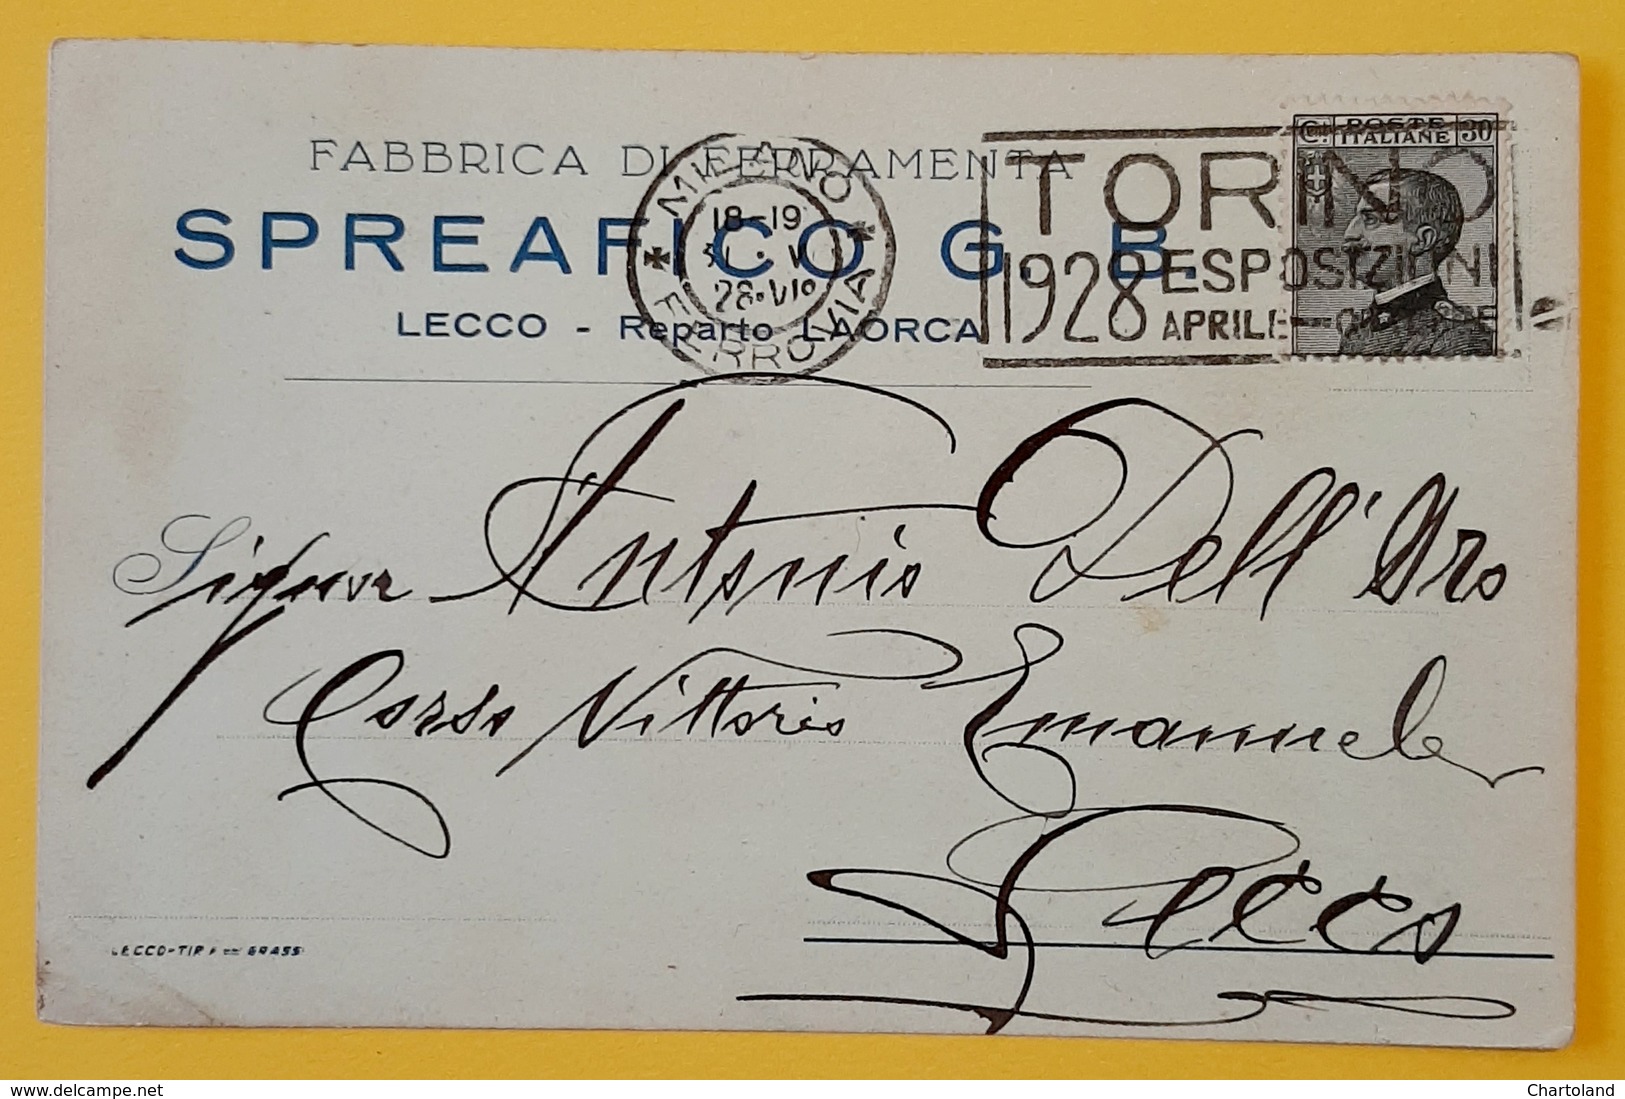 Cartolina Fabbrica Di Ferramenta - Spreafico G. B. - 1928 - Pubblicitari